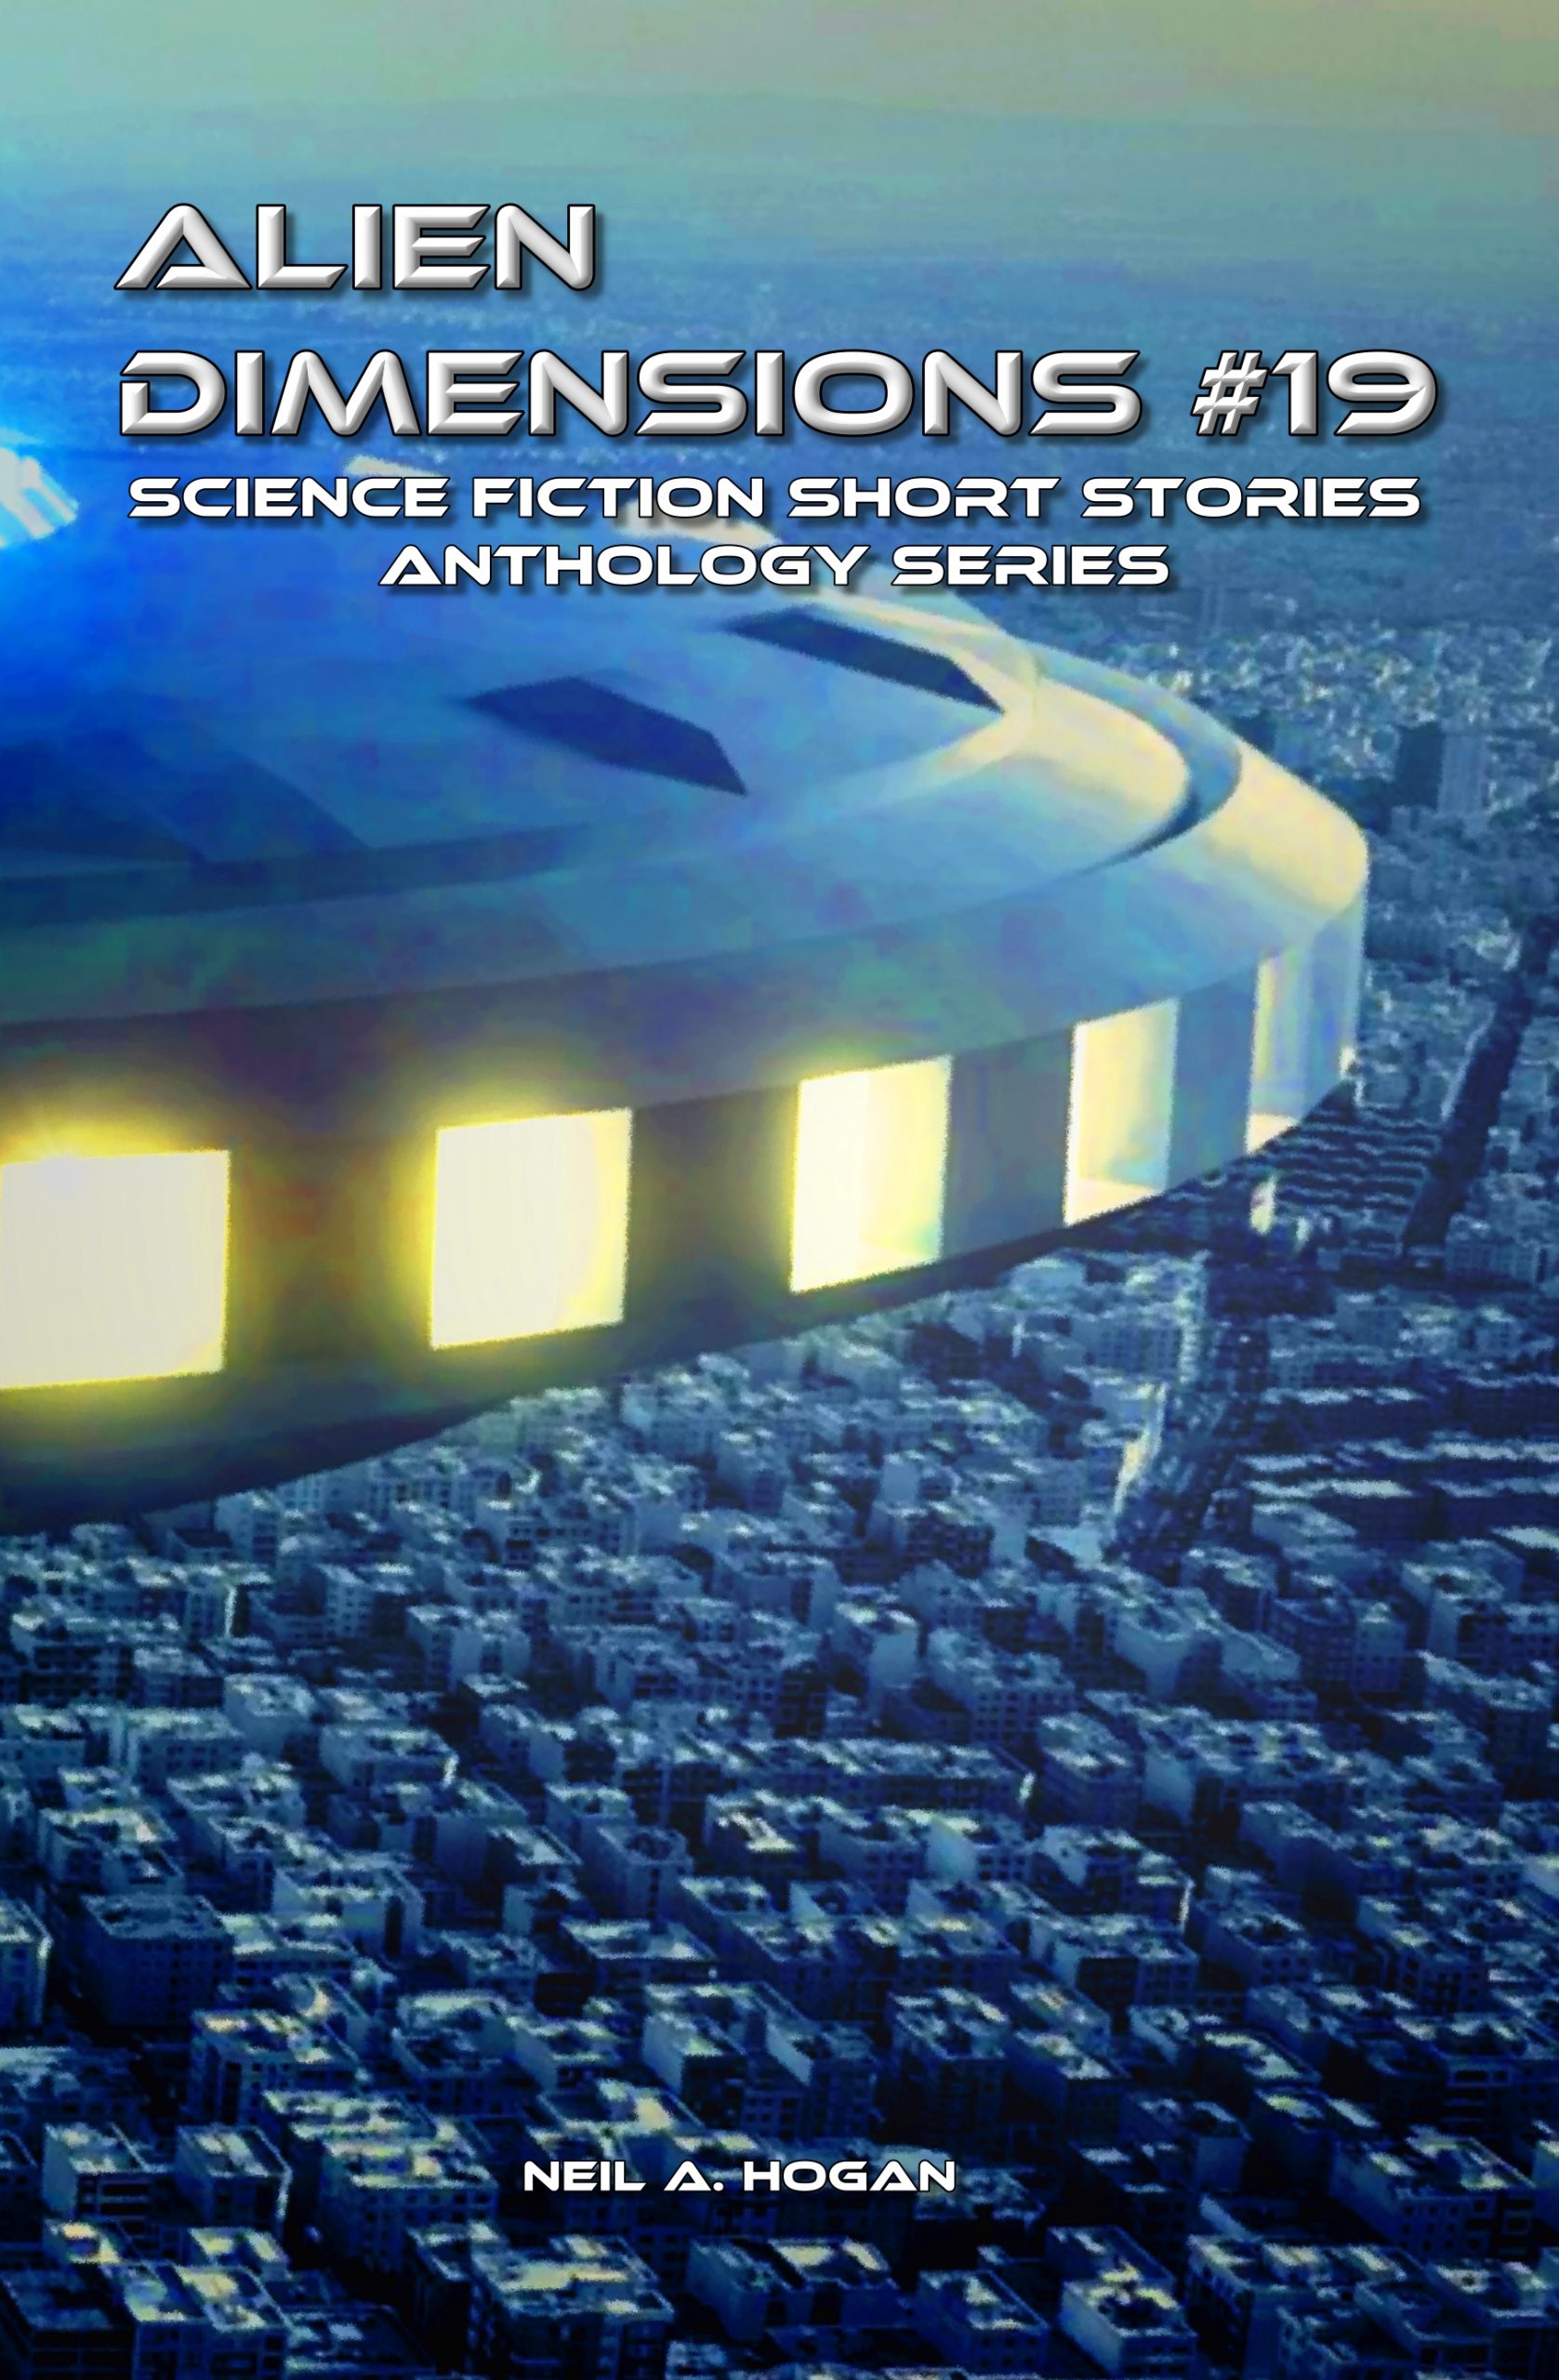 Alien Dimensions Science Fiction Short Stories Anthology Series #19